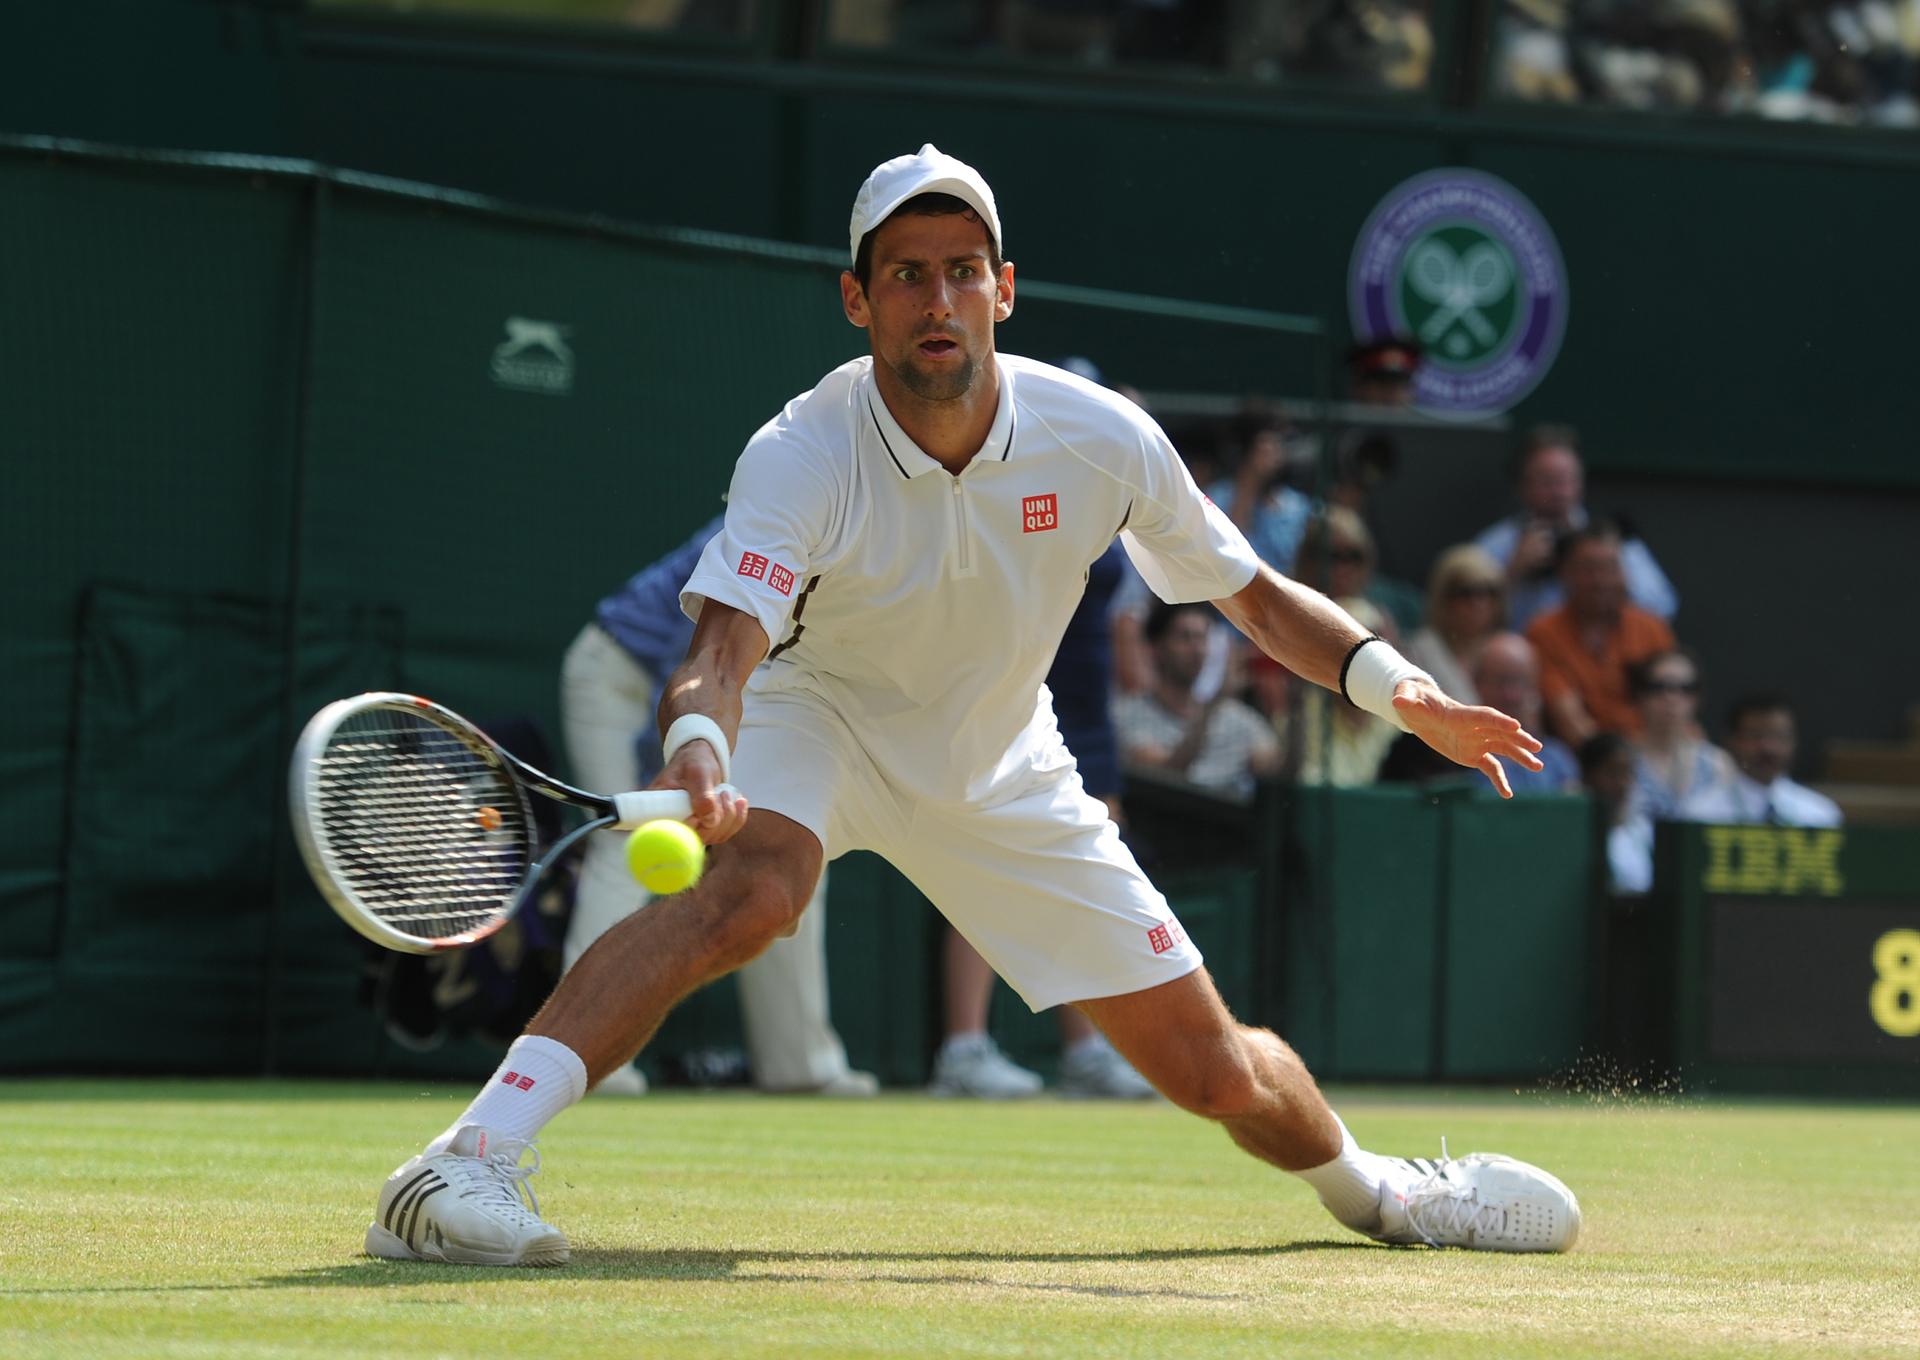 Novak Djokovic during the 2013 Wimbledon Men's Singles Final against Andy Murray.